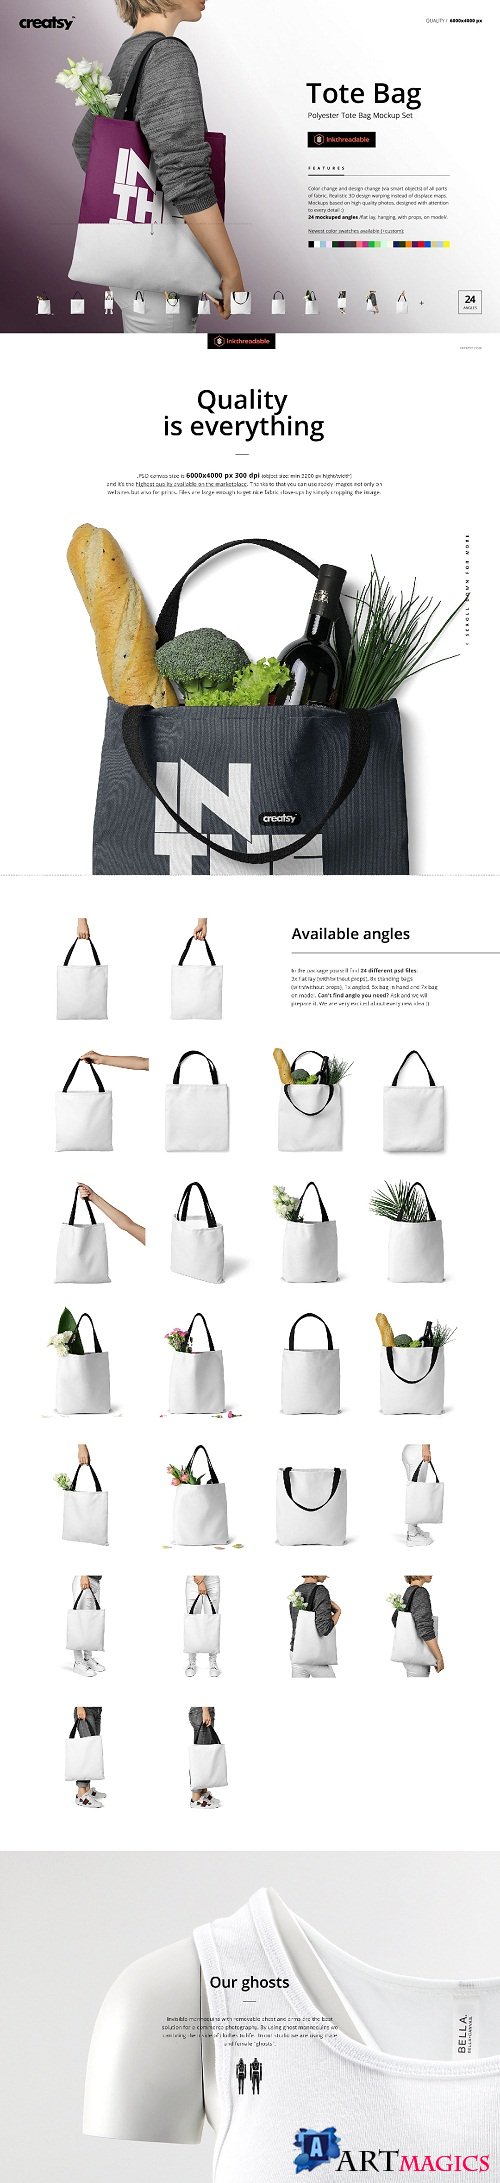 Polyester Tote Bag Mockup Set - 3418422